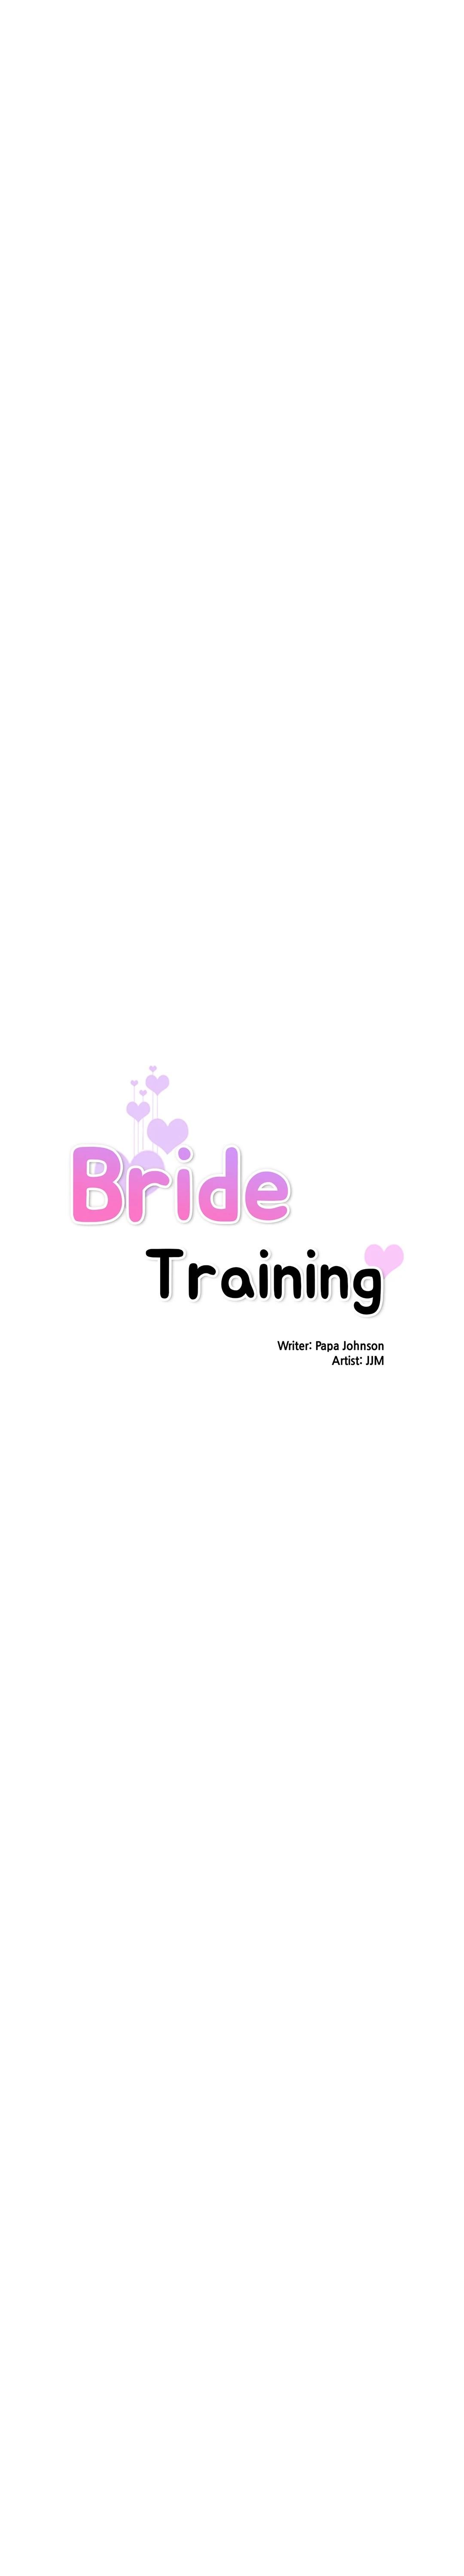 bride-training-chap-33-2